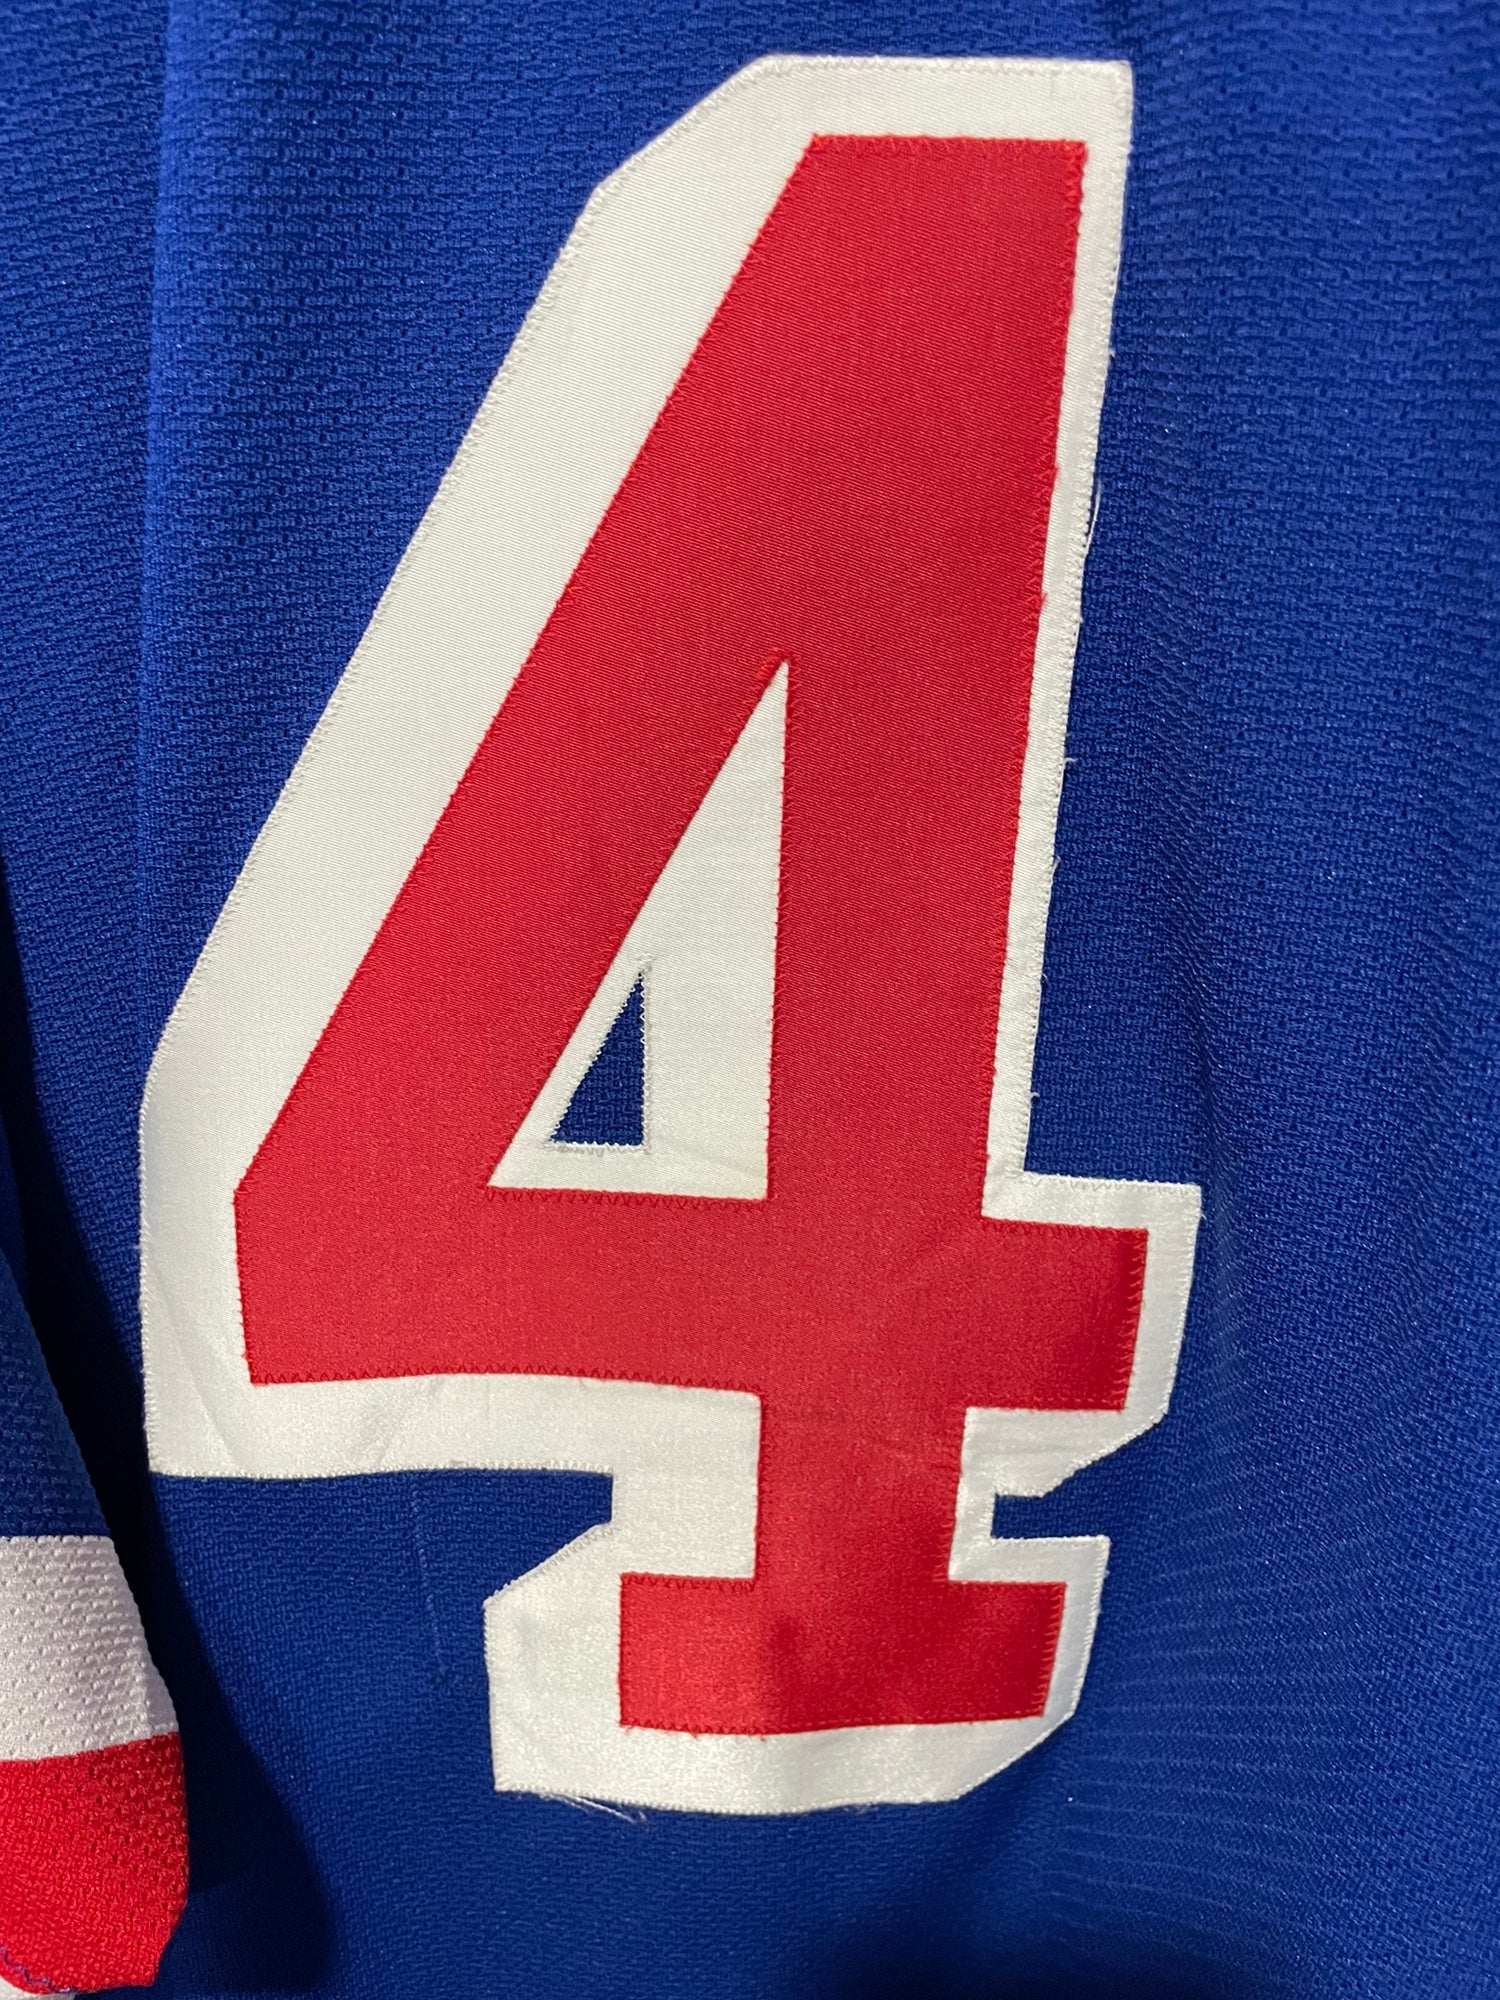 NHL New York Rangers authentic pro KOHO #4 jersey